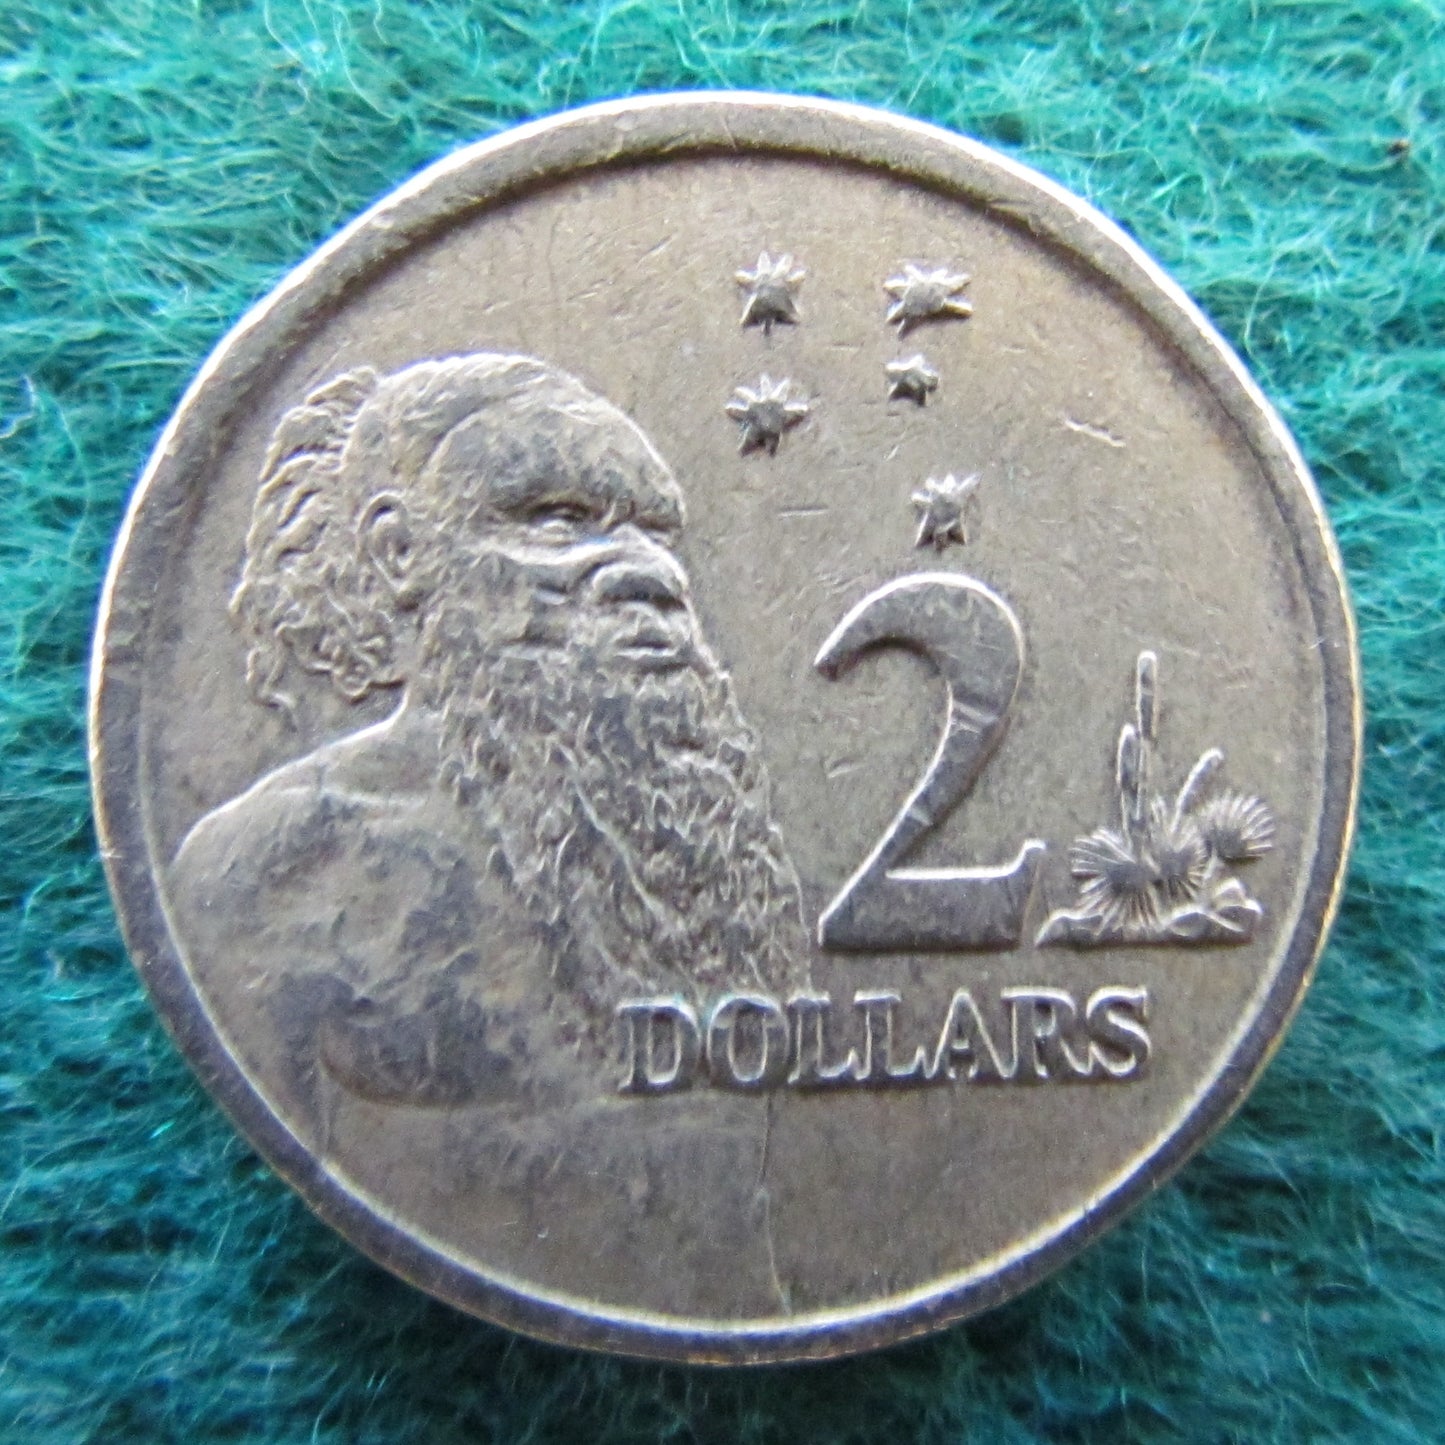 Australian 2002 2 Dollar Aboriginal Elder Queen Elizabeth Coin - Circulated